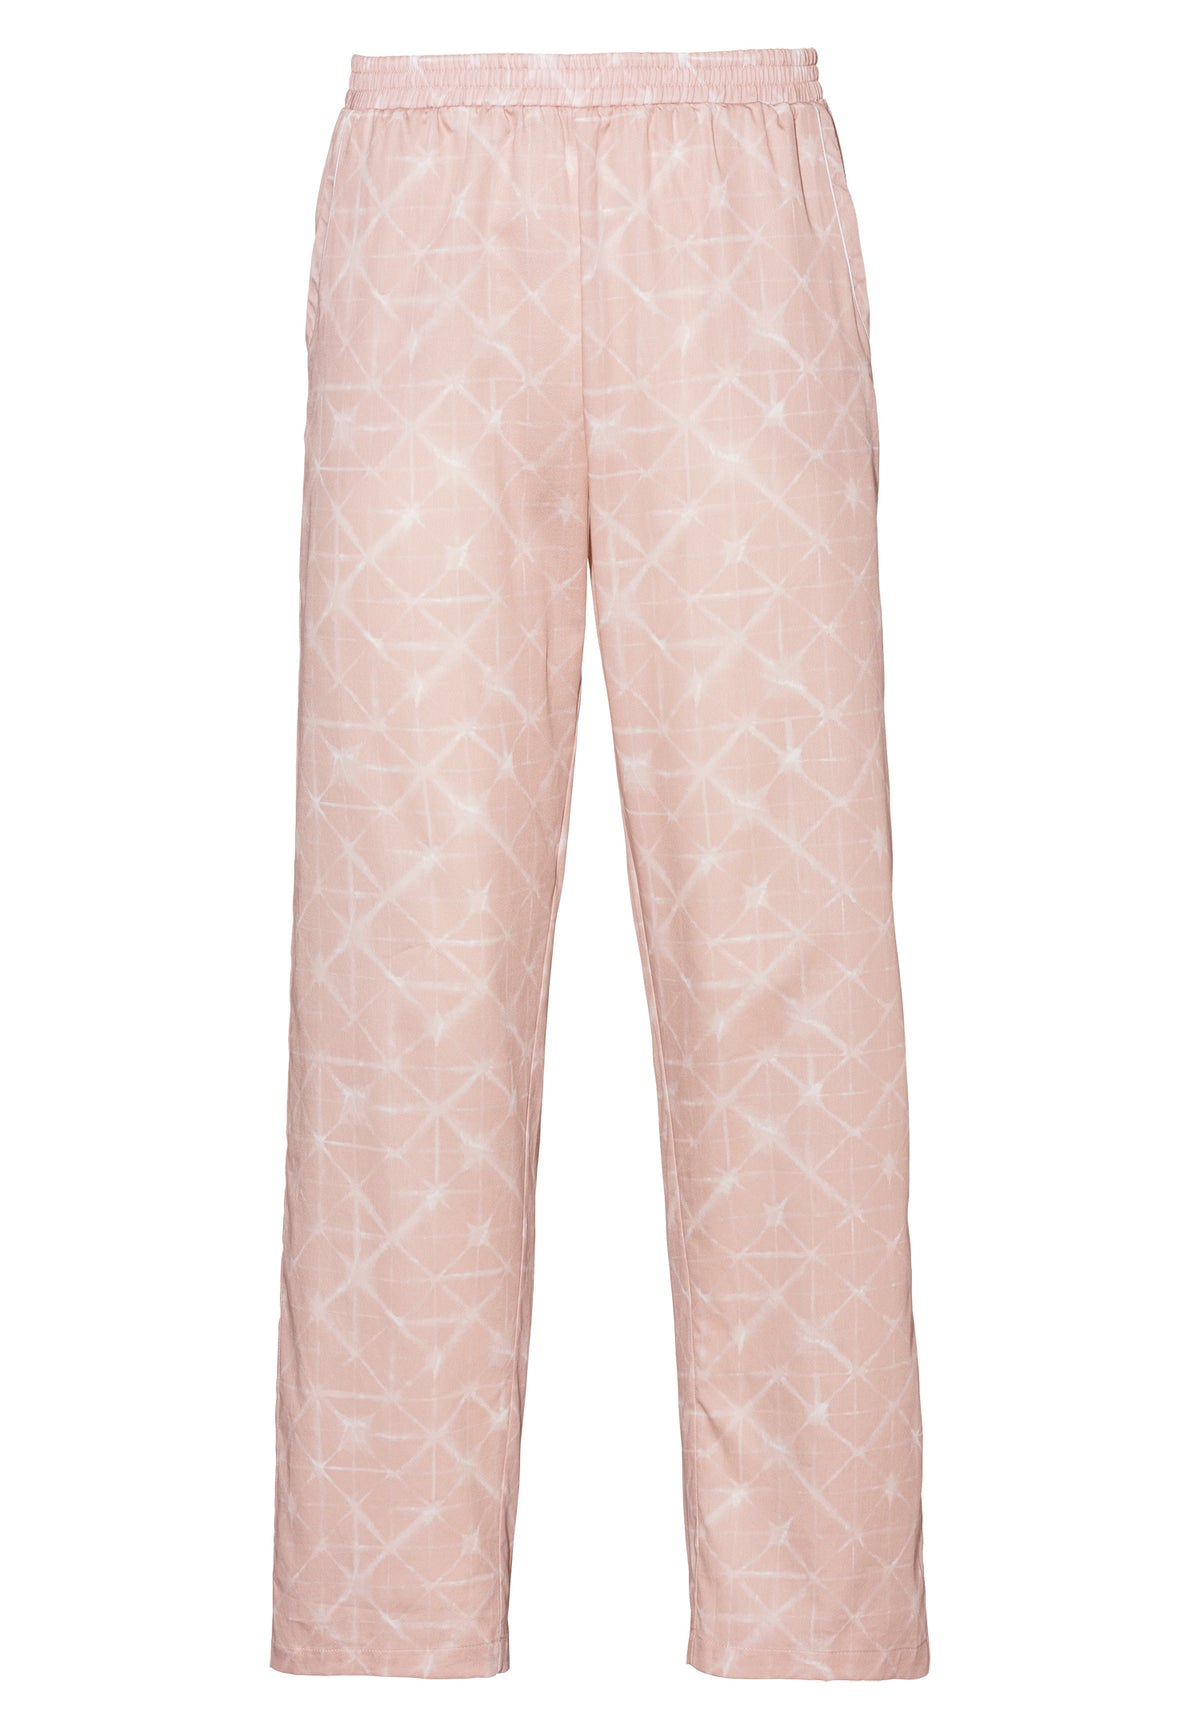 Cotton Sateen Print | Pantalon - geo-batic rose